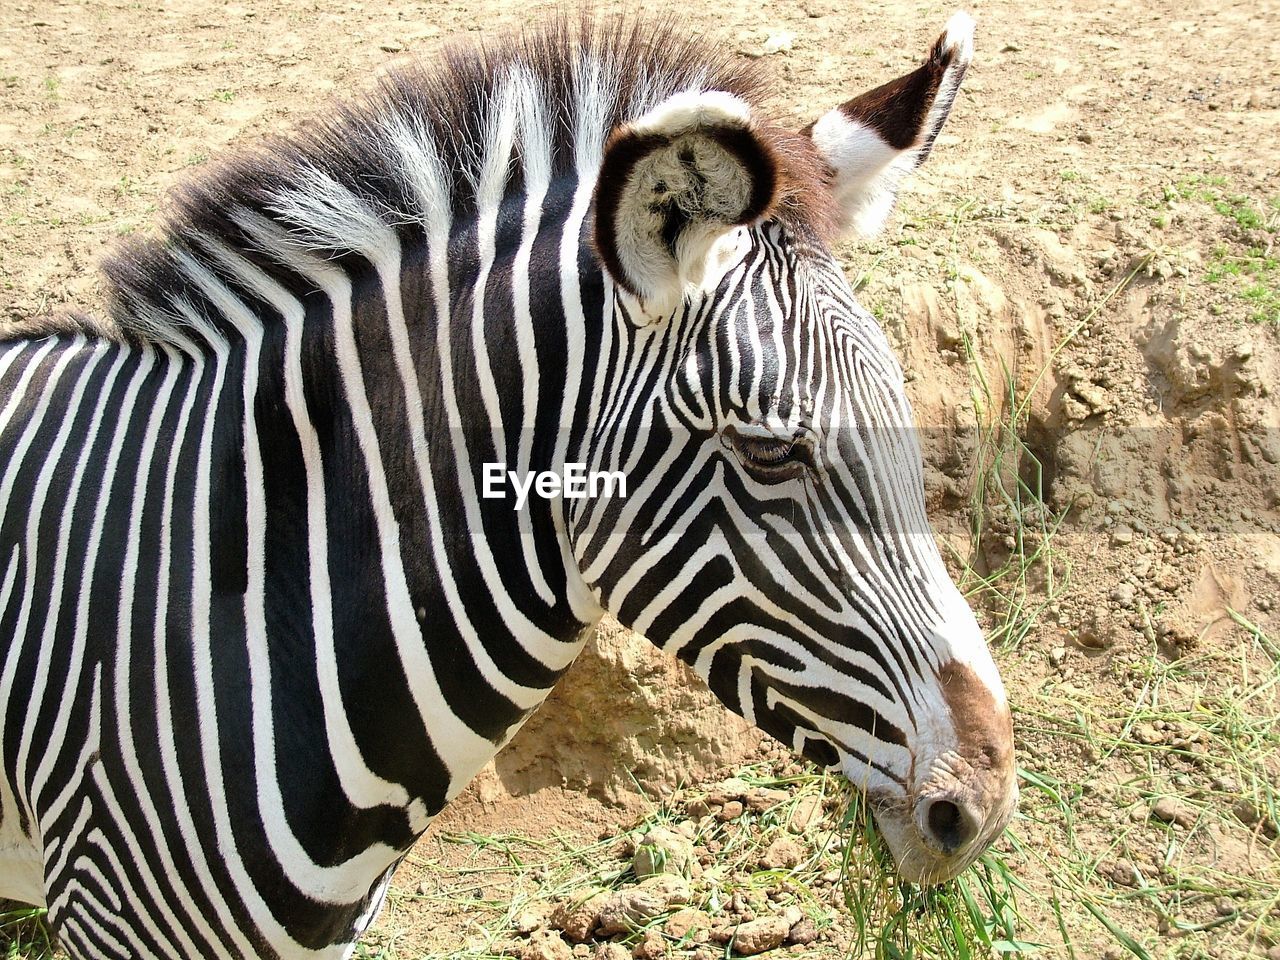 Close-up of zebra standing outdoors